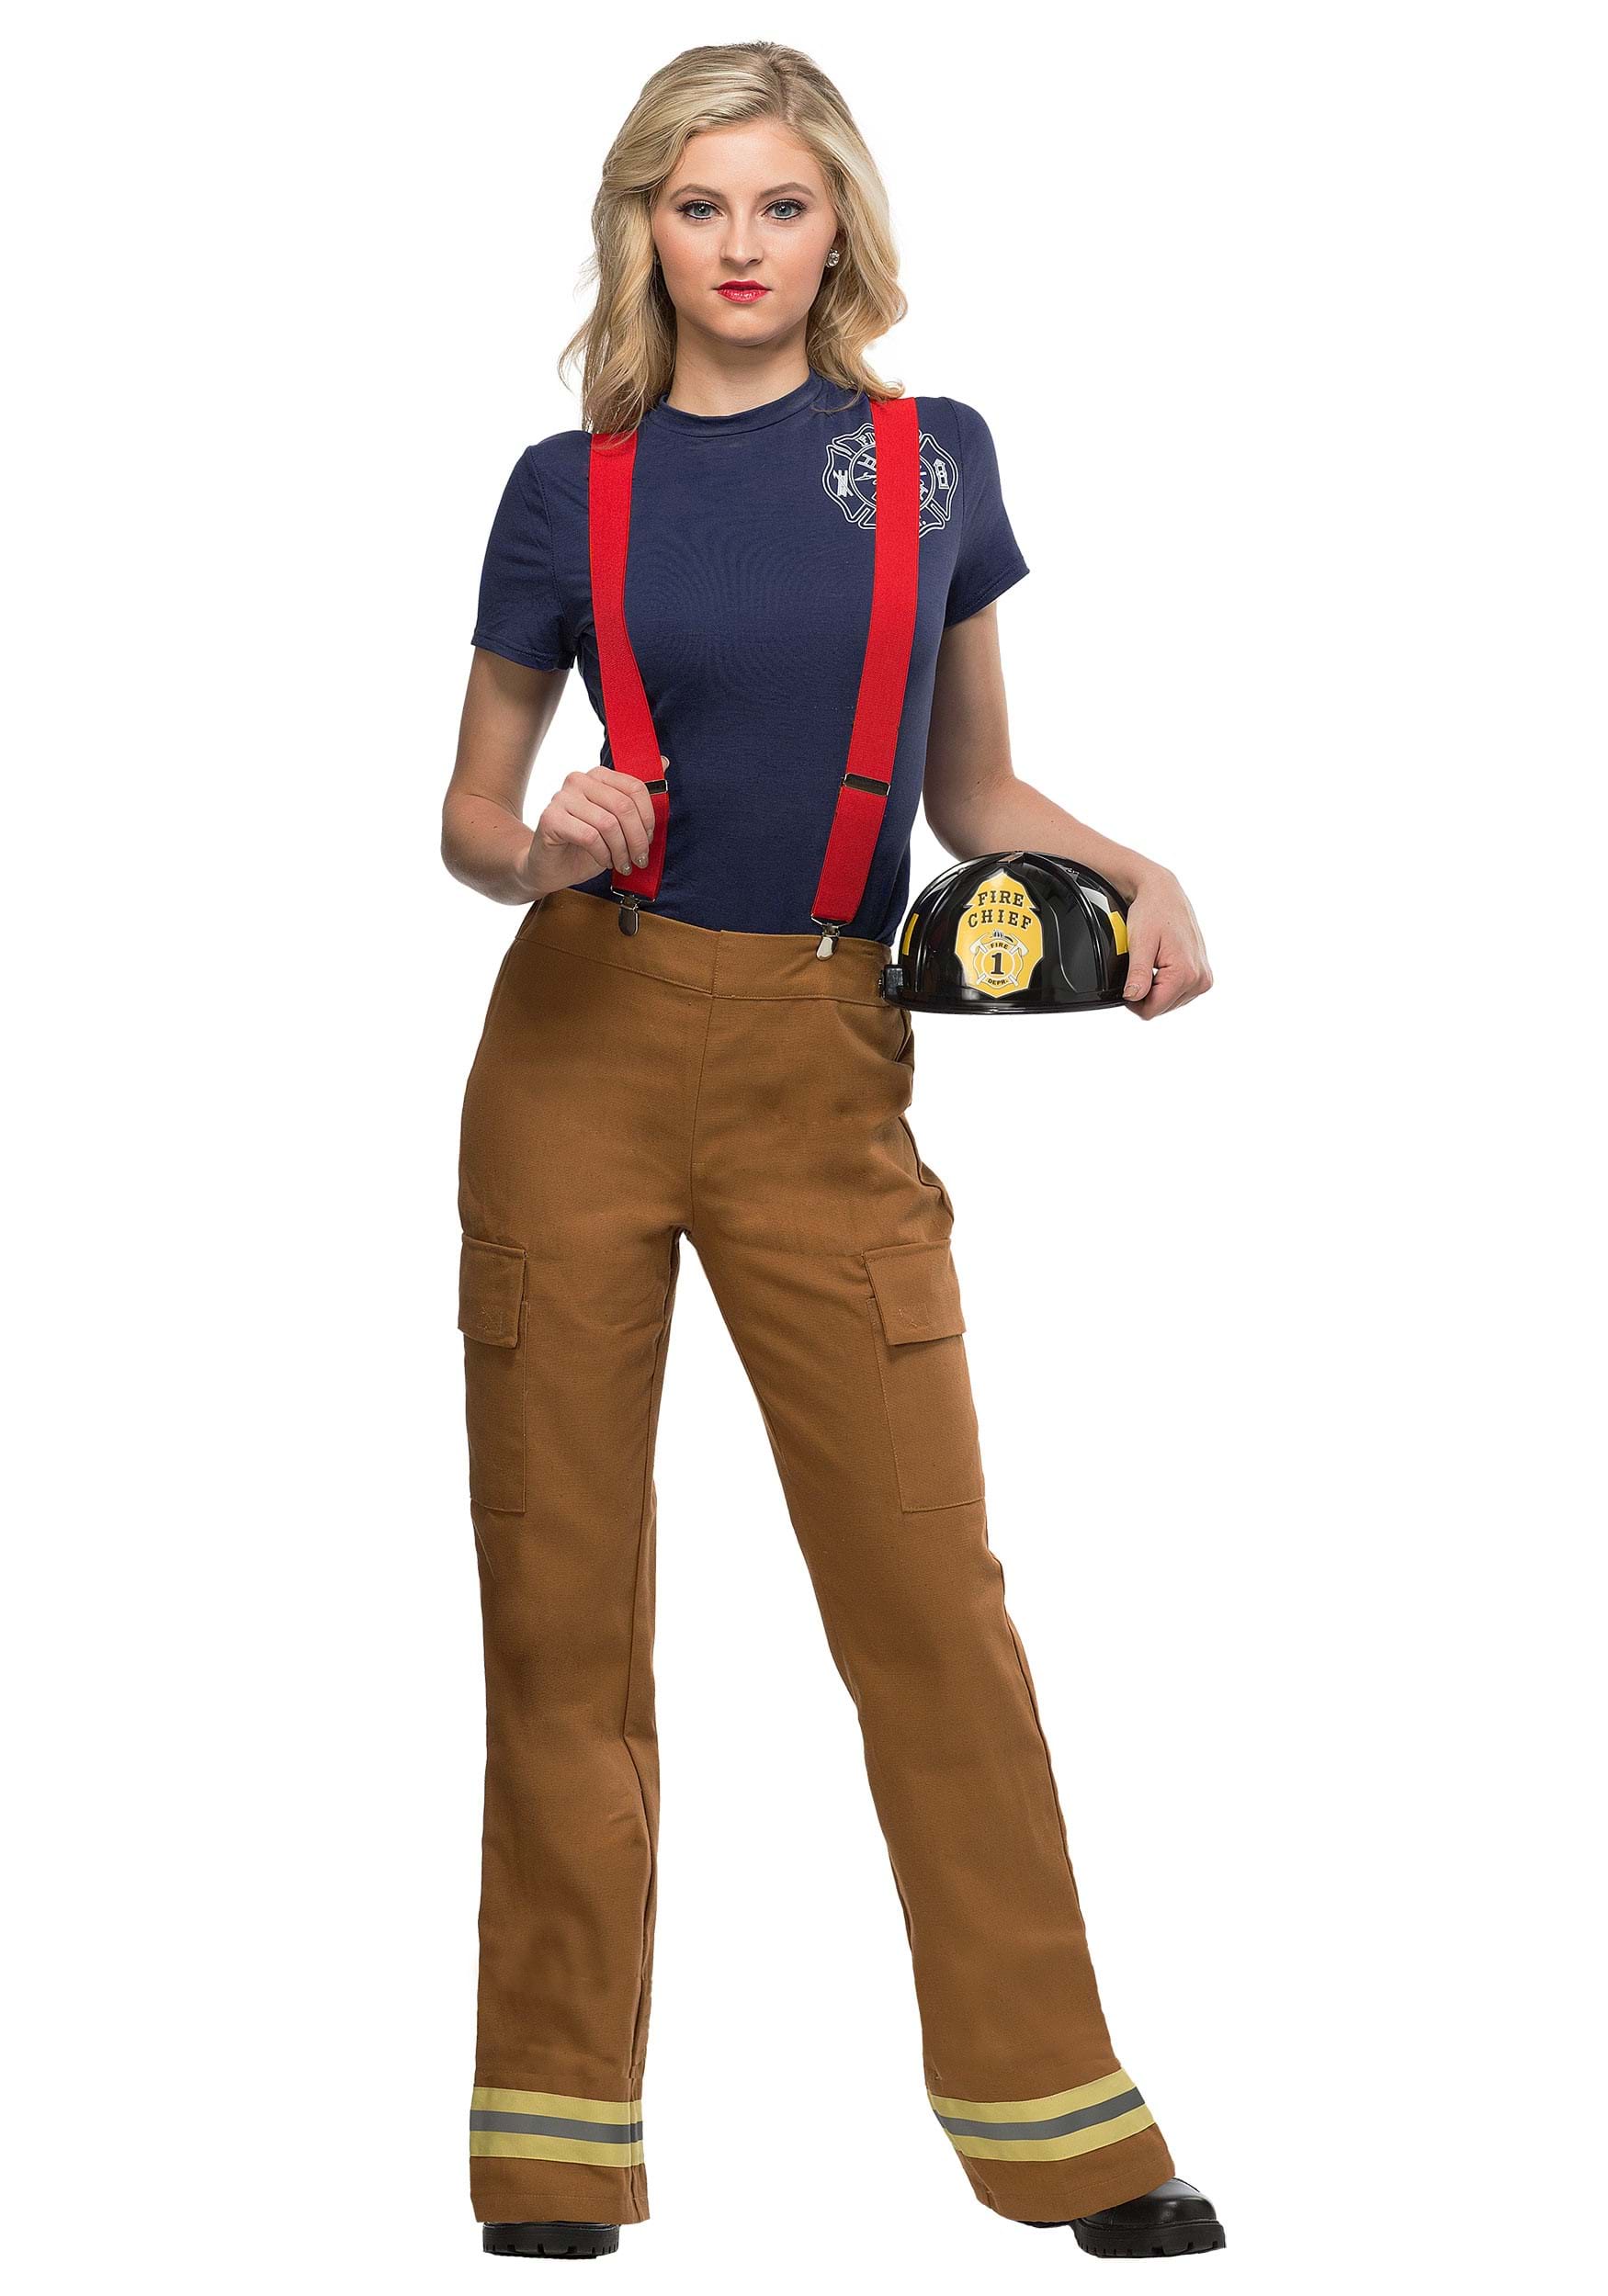 Fire Captain Costume for Women